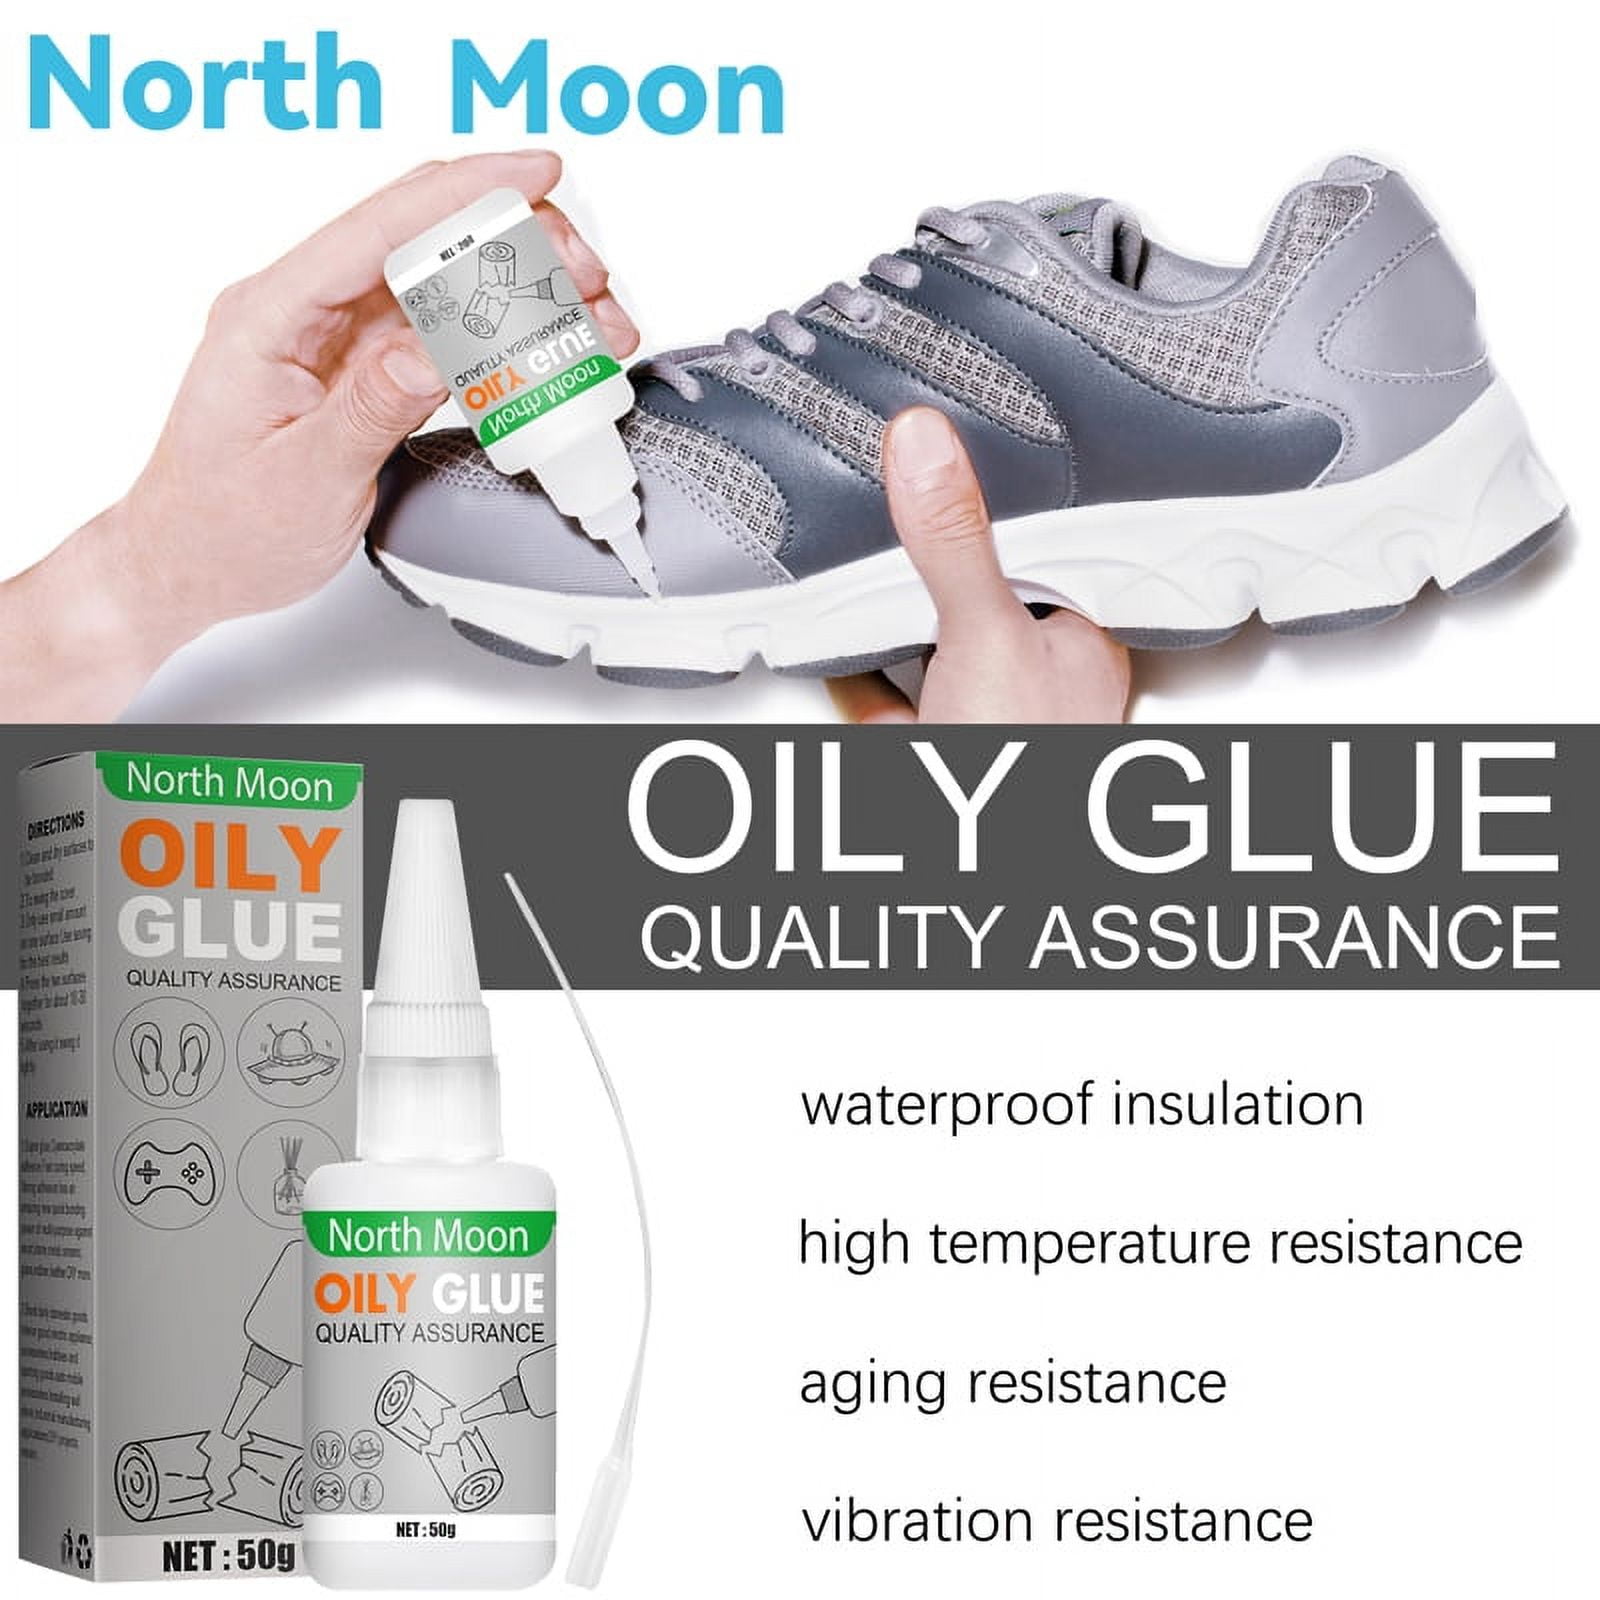 60ml Super Strong Glue Shoe Glue Strong Multi-Purpose Waterproof